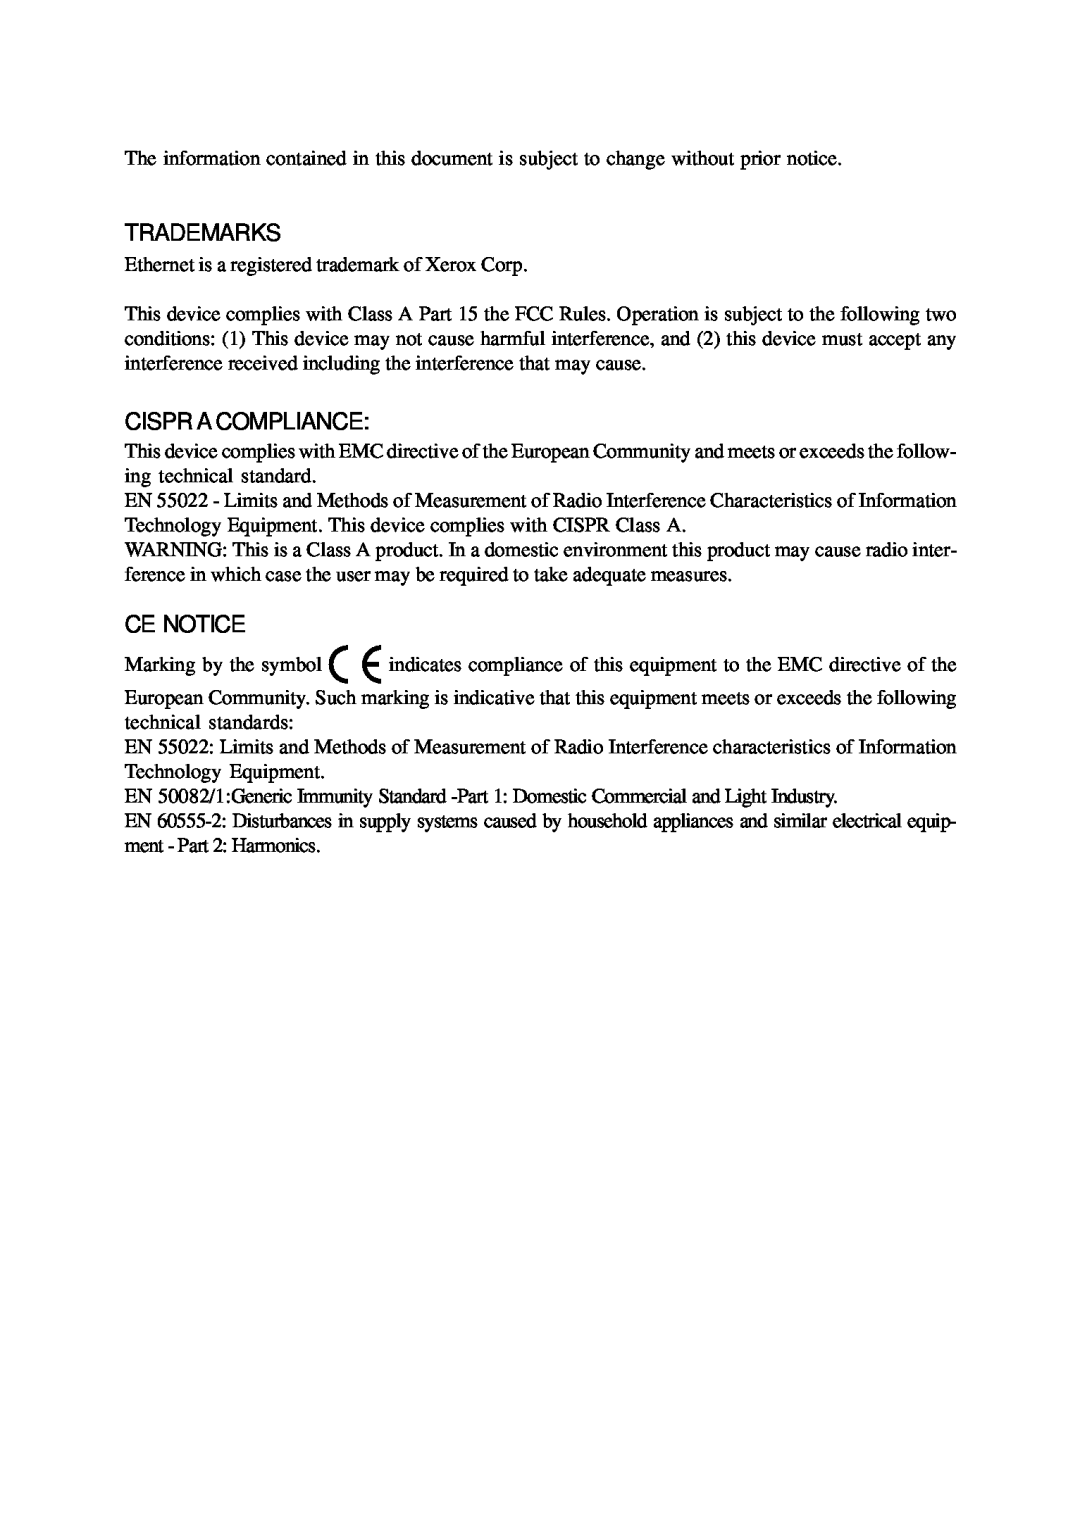 Xerox KS-801 operation manual Trademarks, Cispr A Compliance, Ce Notice 